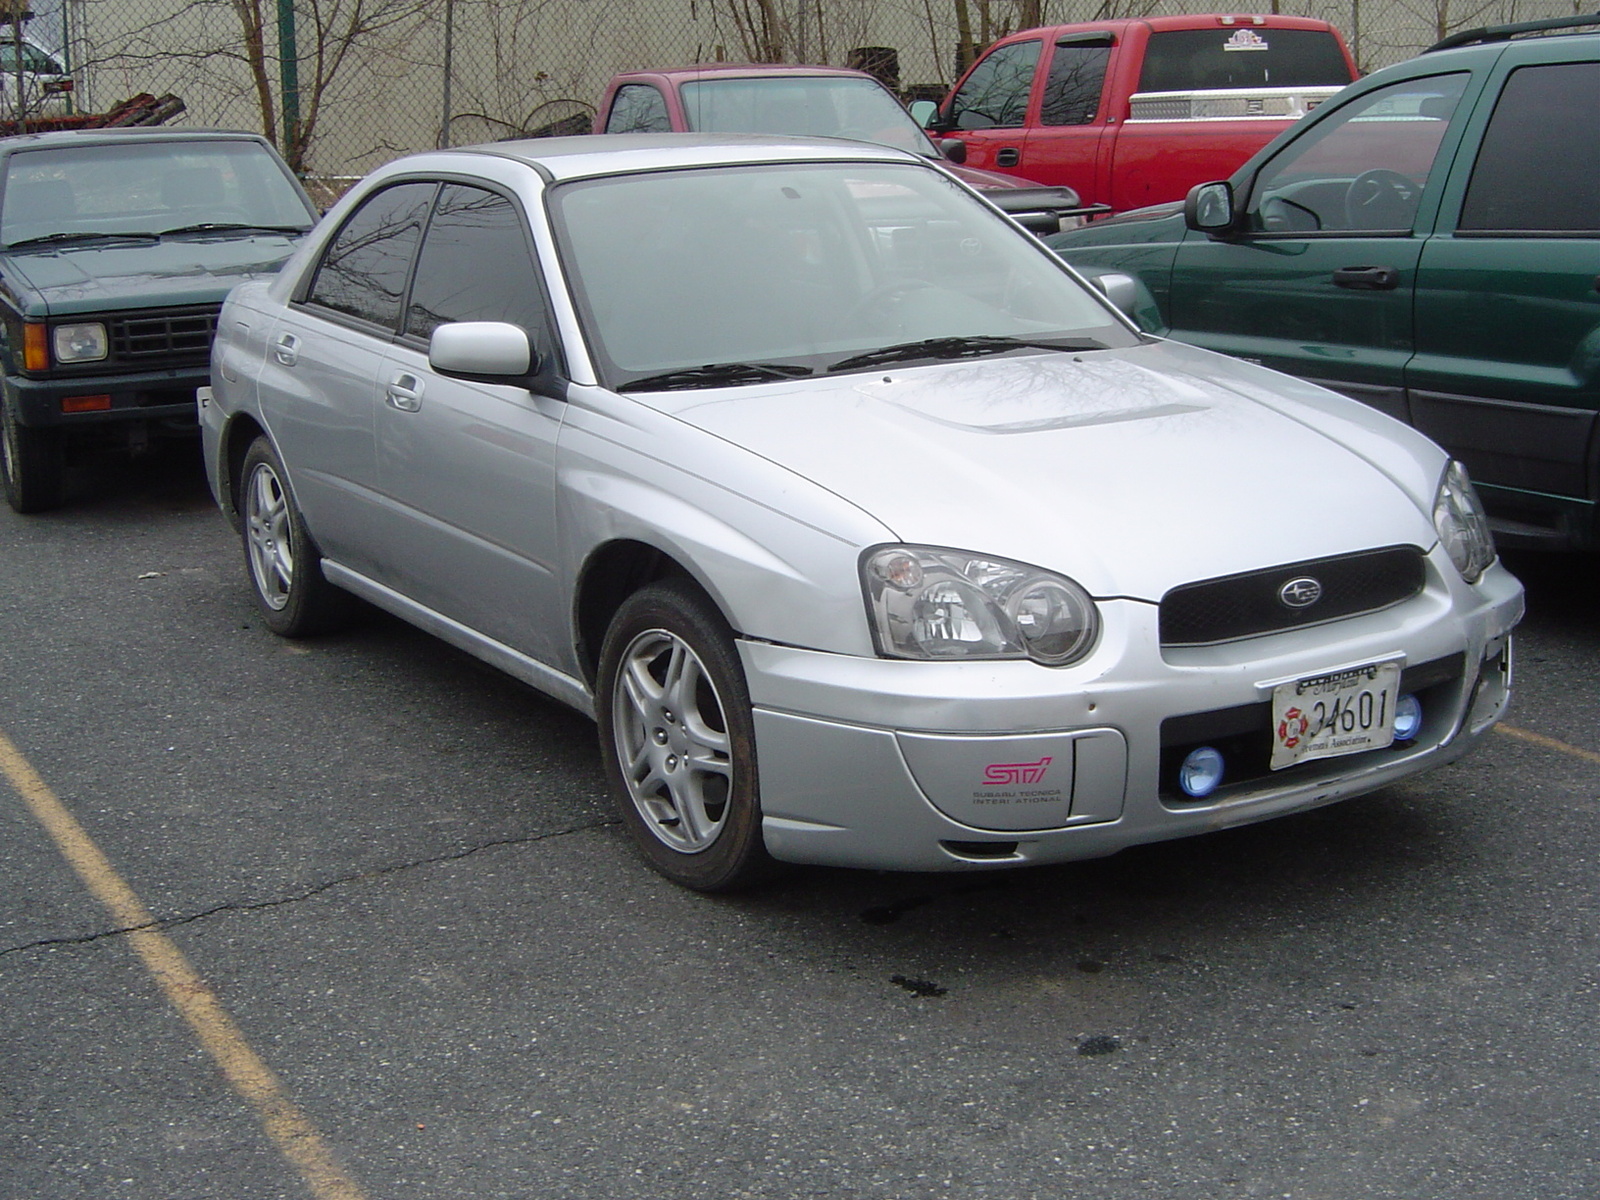 2004 Subaru Impreza Information and photos MOMENTcar